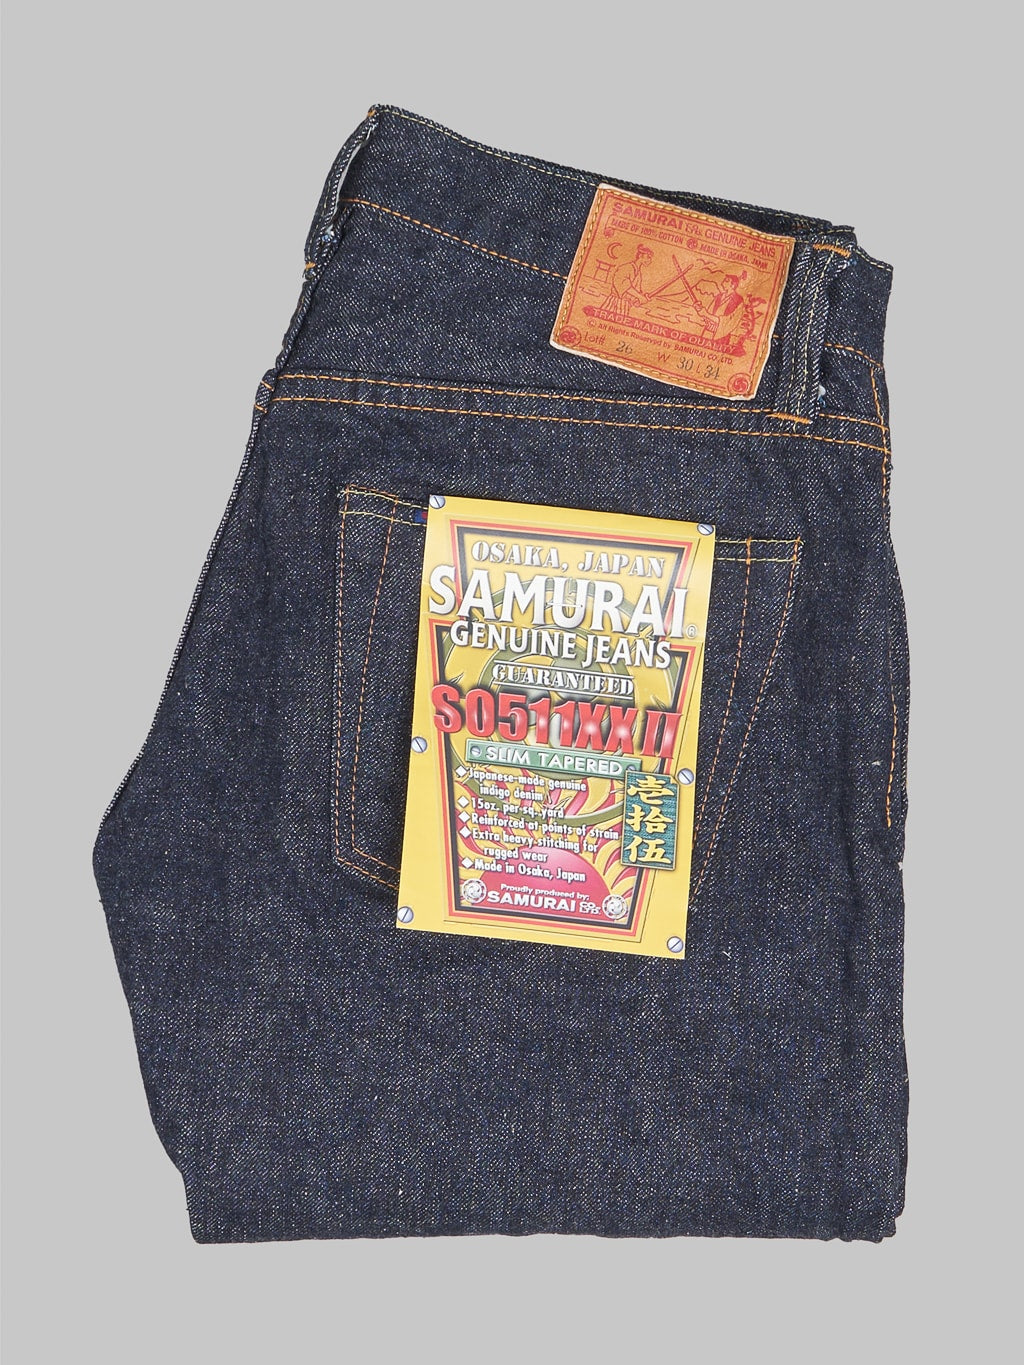 Samurai Jeans S0511XXII "Texas Cotton" 15oz Slim Tapered Jeans